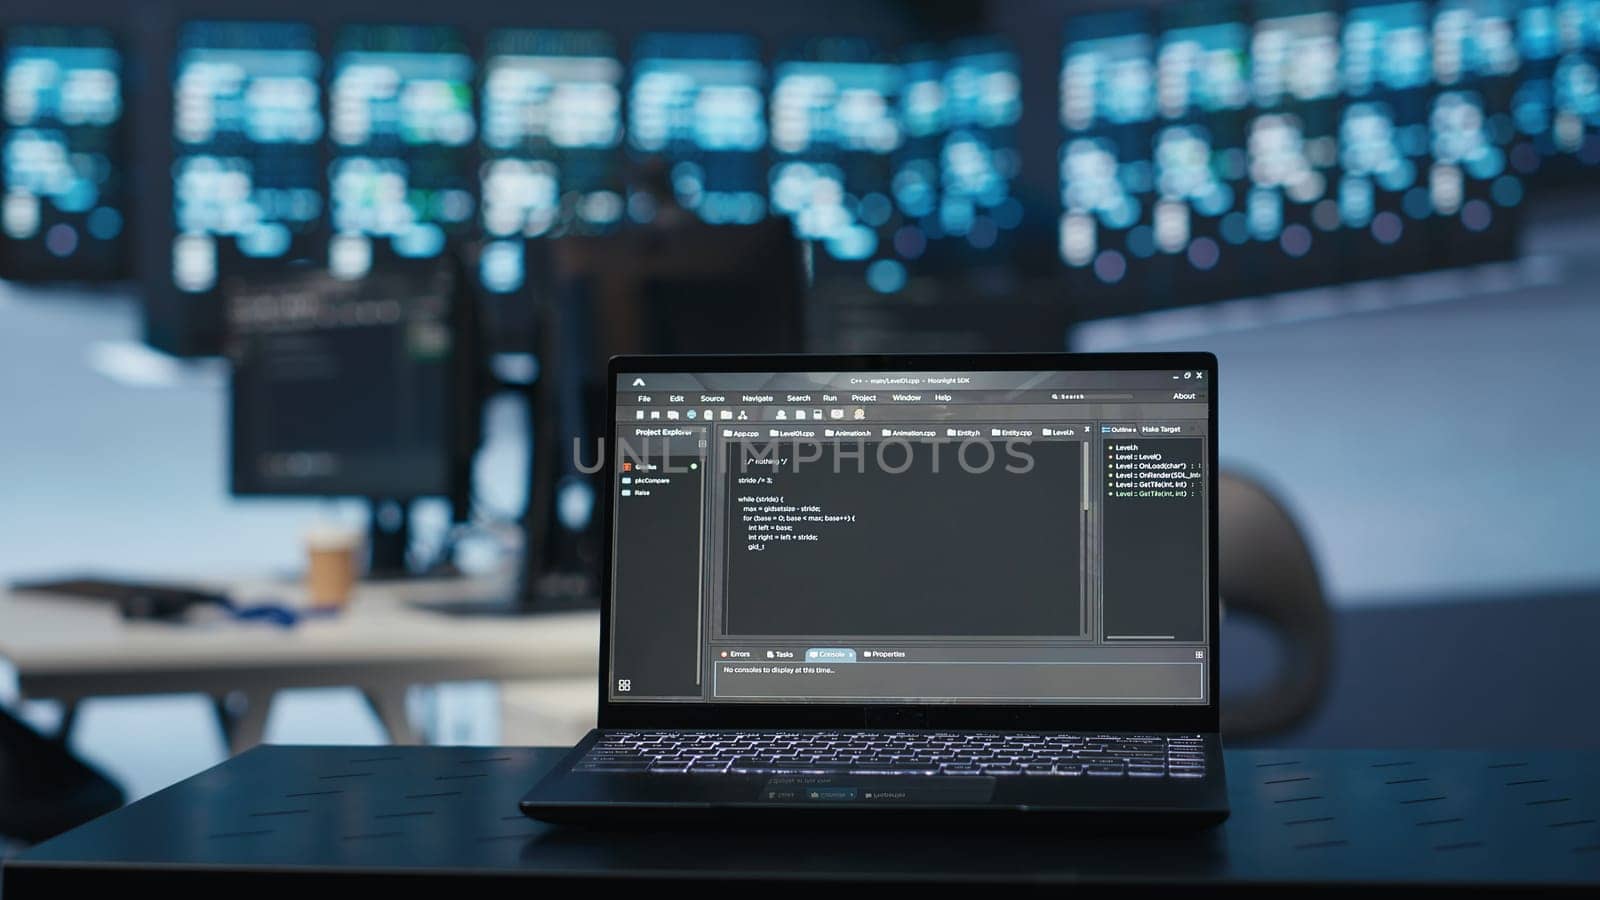 Focus on script running on laptop in server room, close up shot by DCStudio